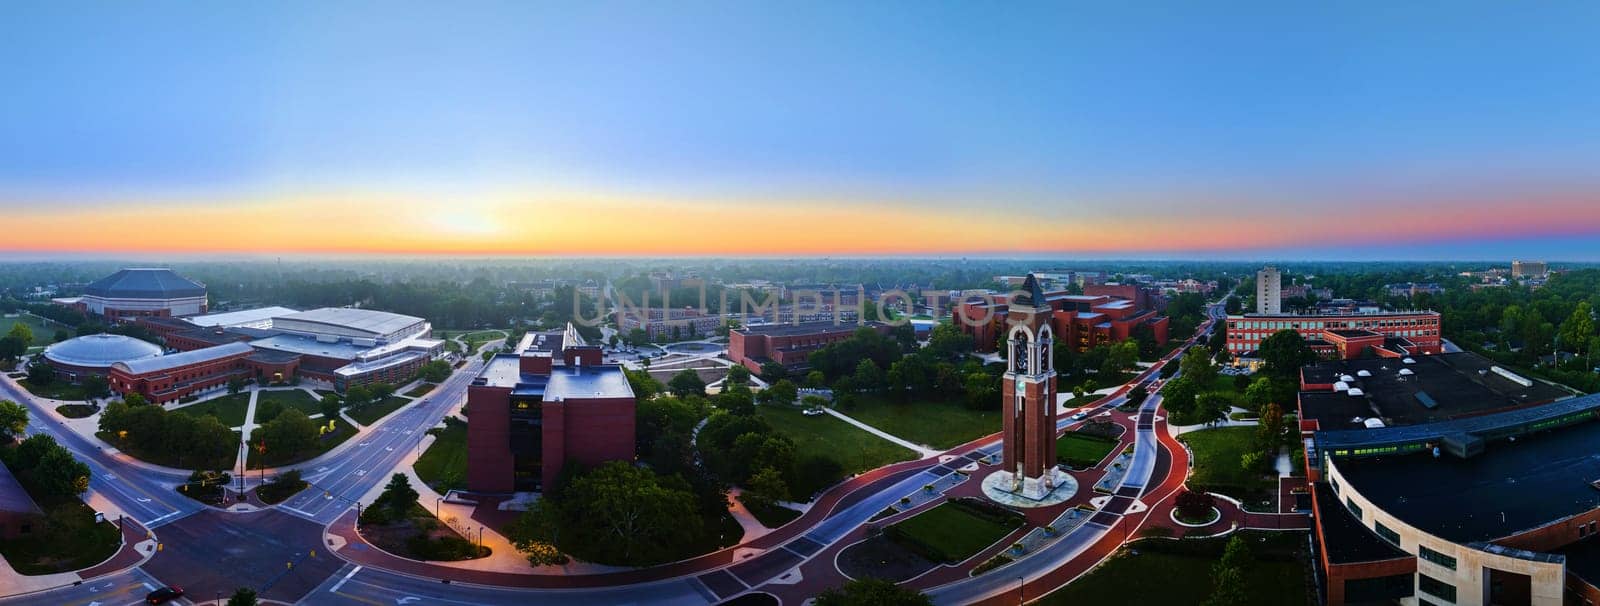 Sunrise Shafer Tower panorama Ball State University aerial Muncie Indiana by njproductions